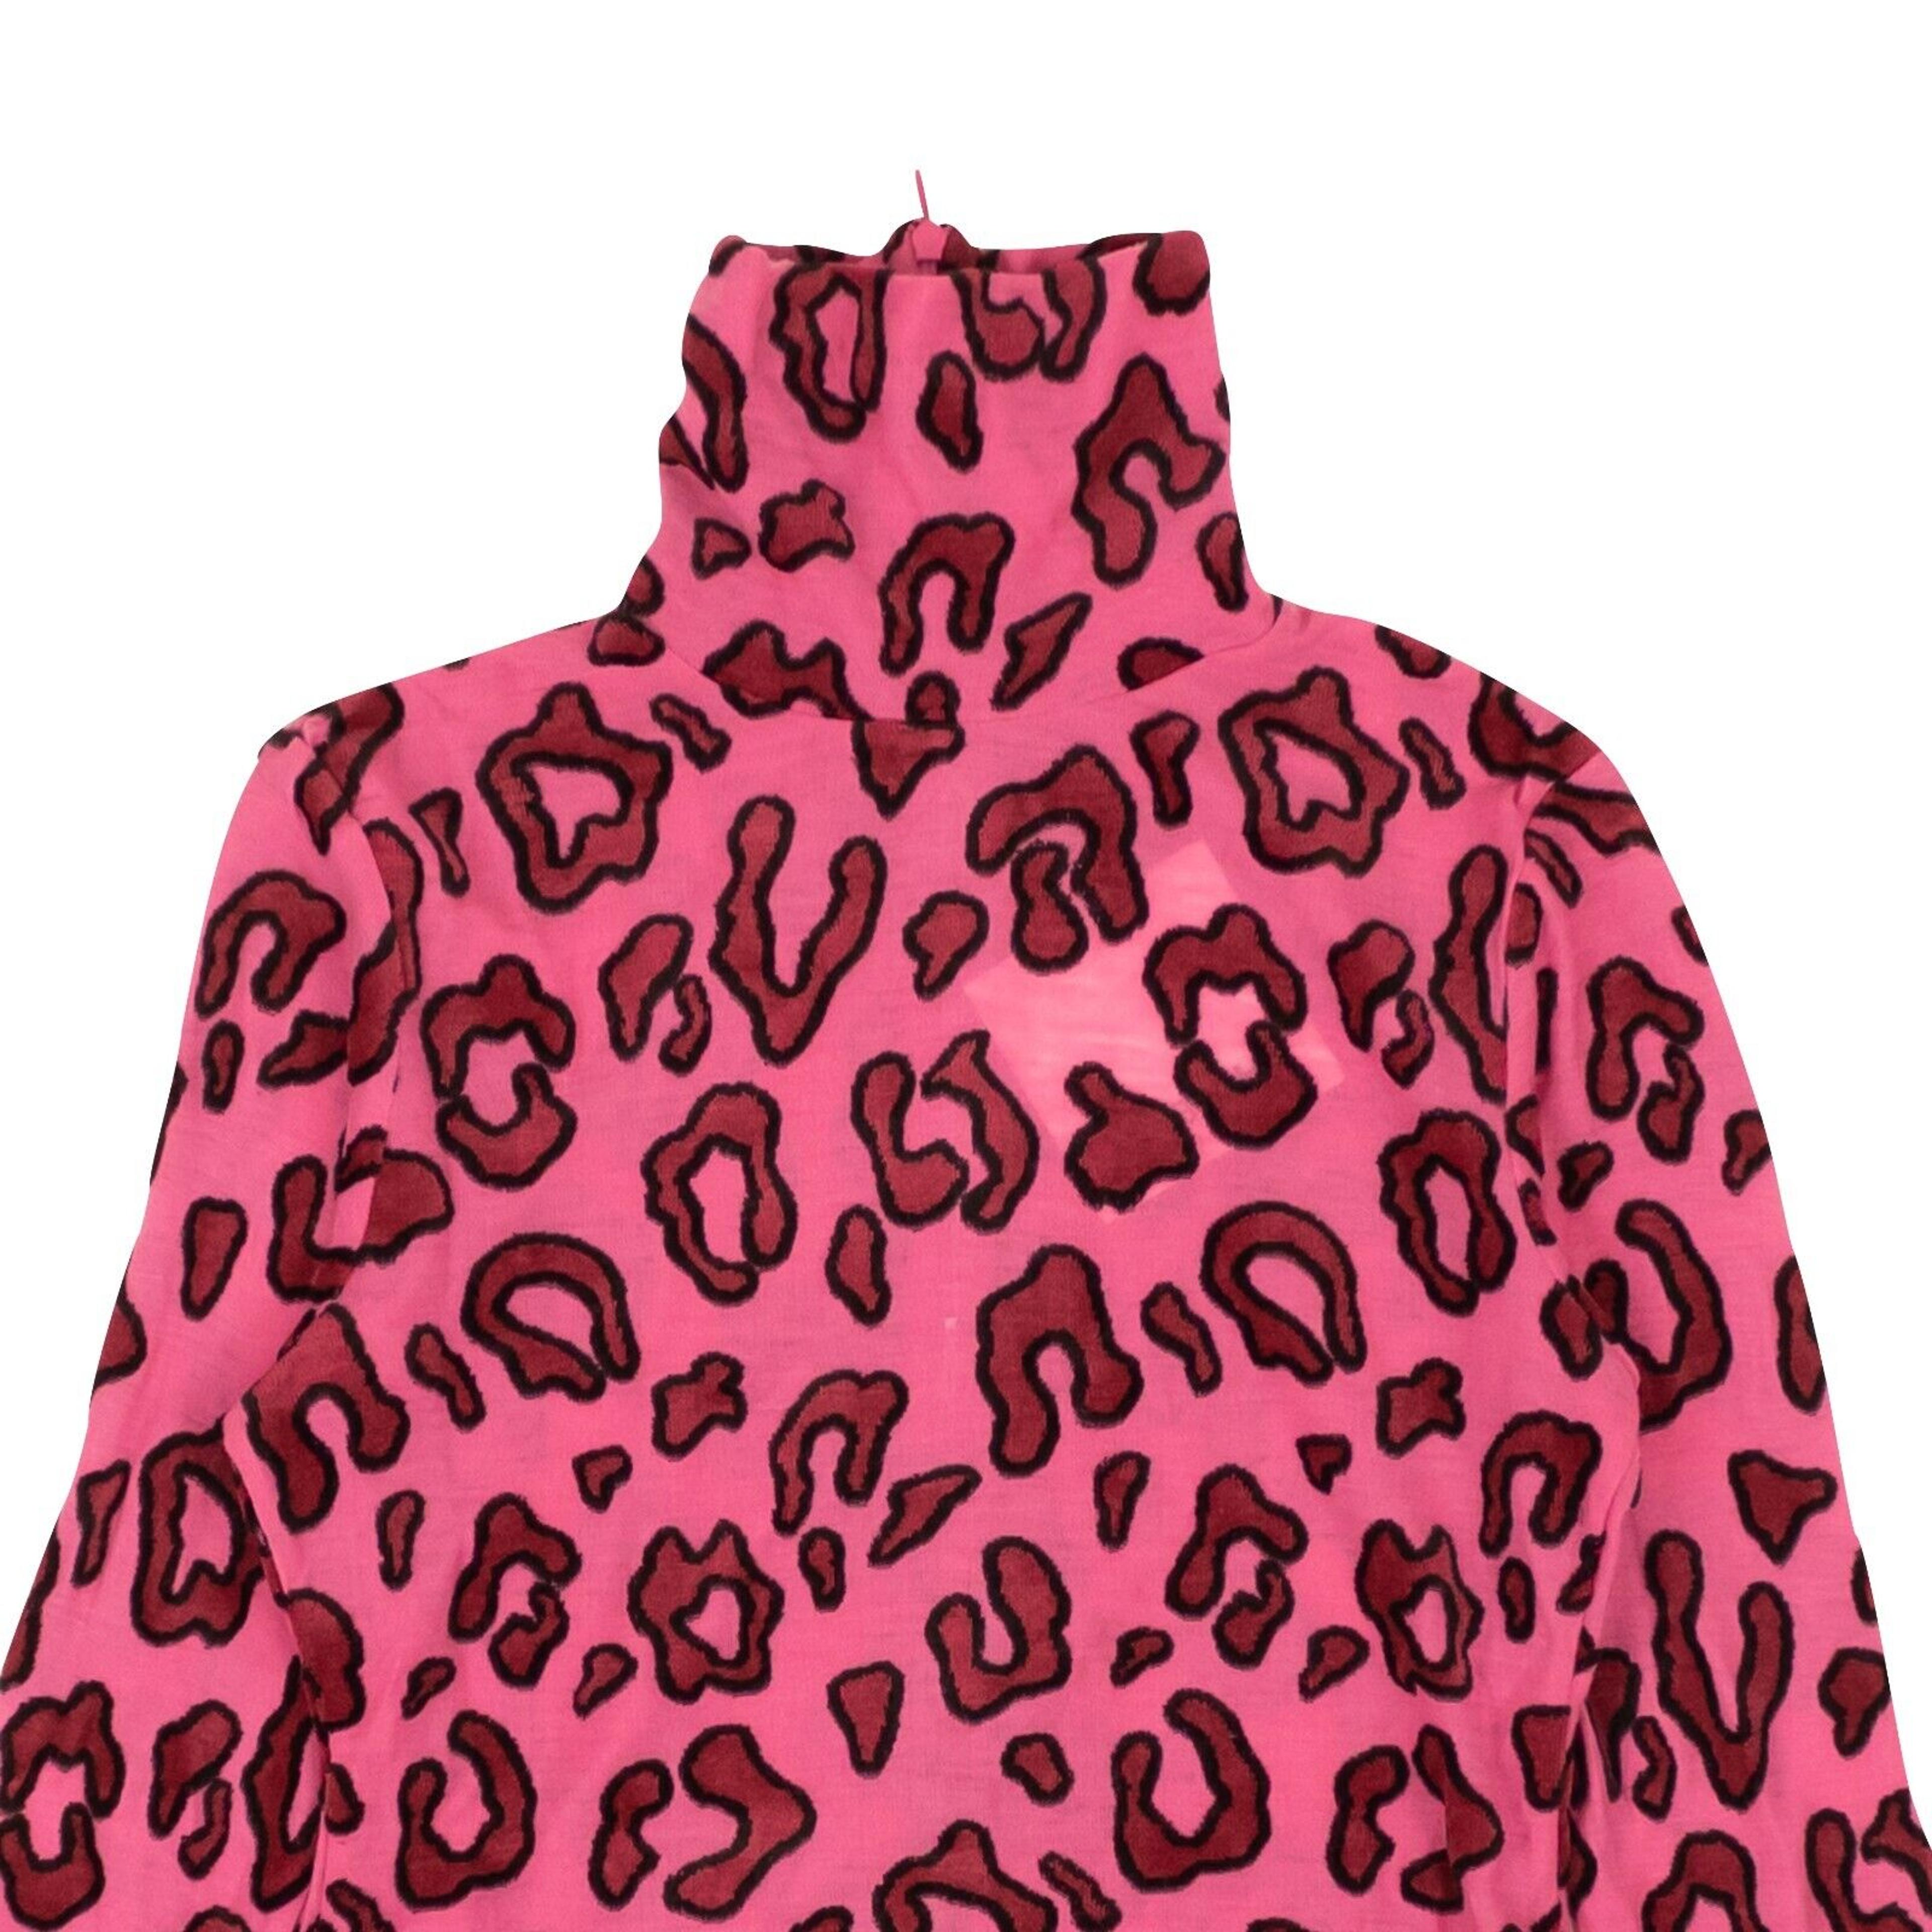 Alternate View 1 of Pink Acrylic Wool Leopard Print Turtleneck Top